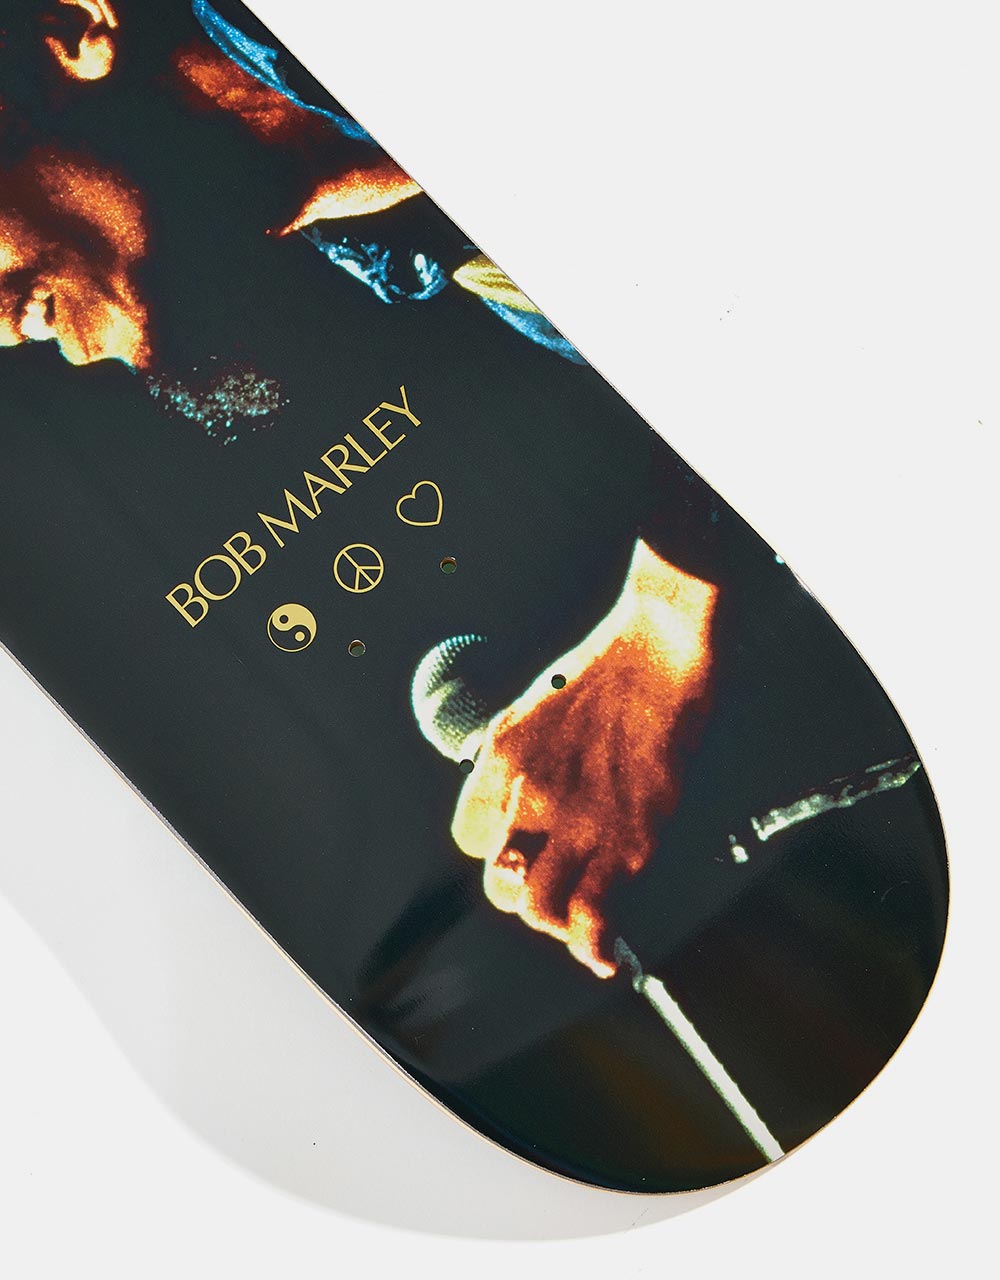 Primitive x Bob Marley Wildone Skateboard Deck - 8.38"